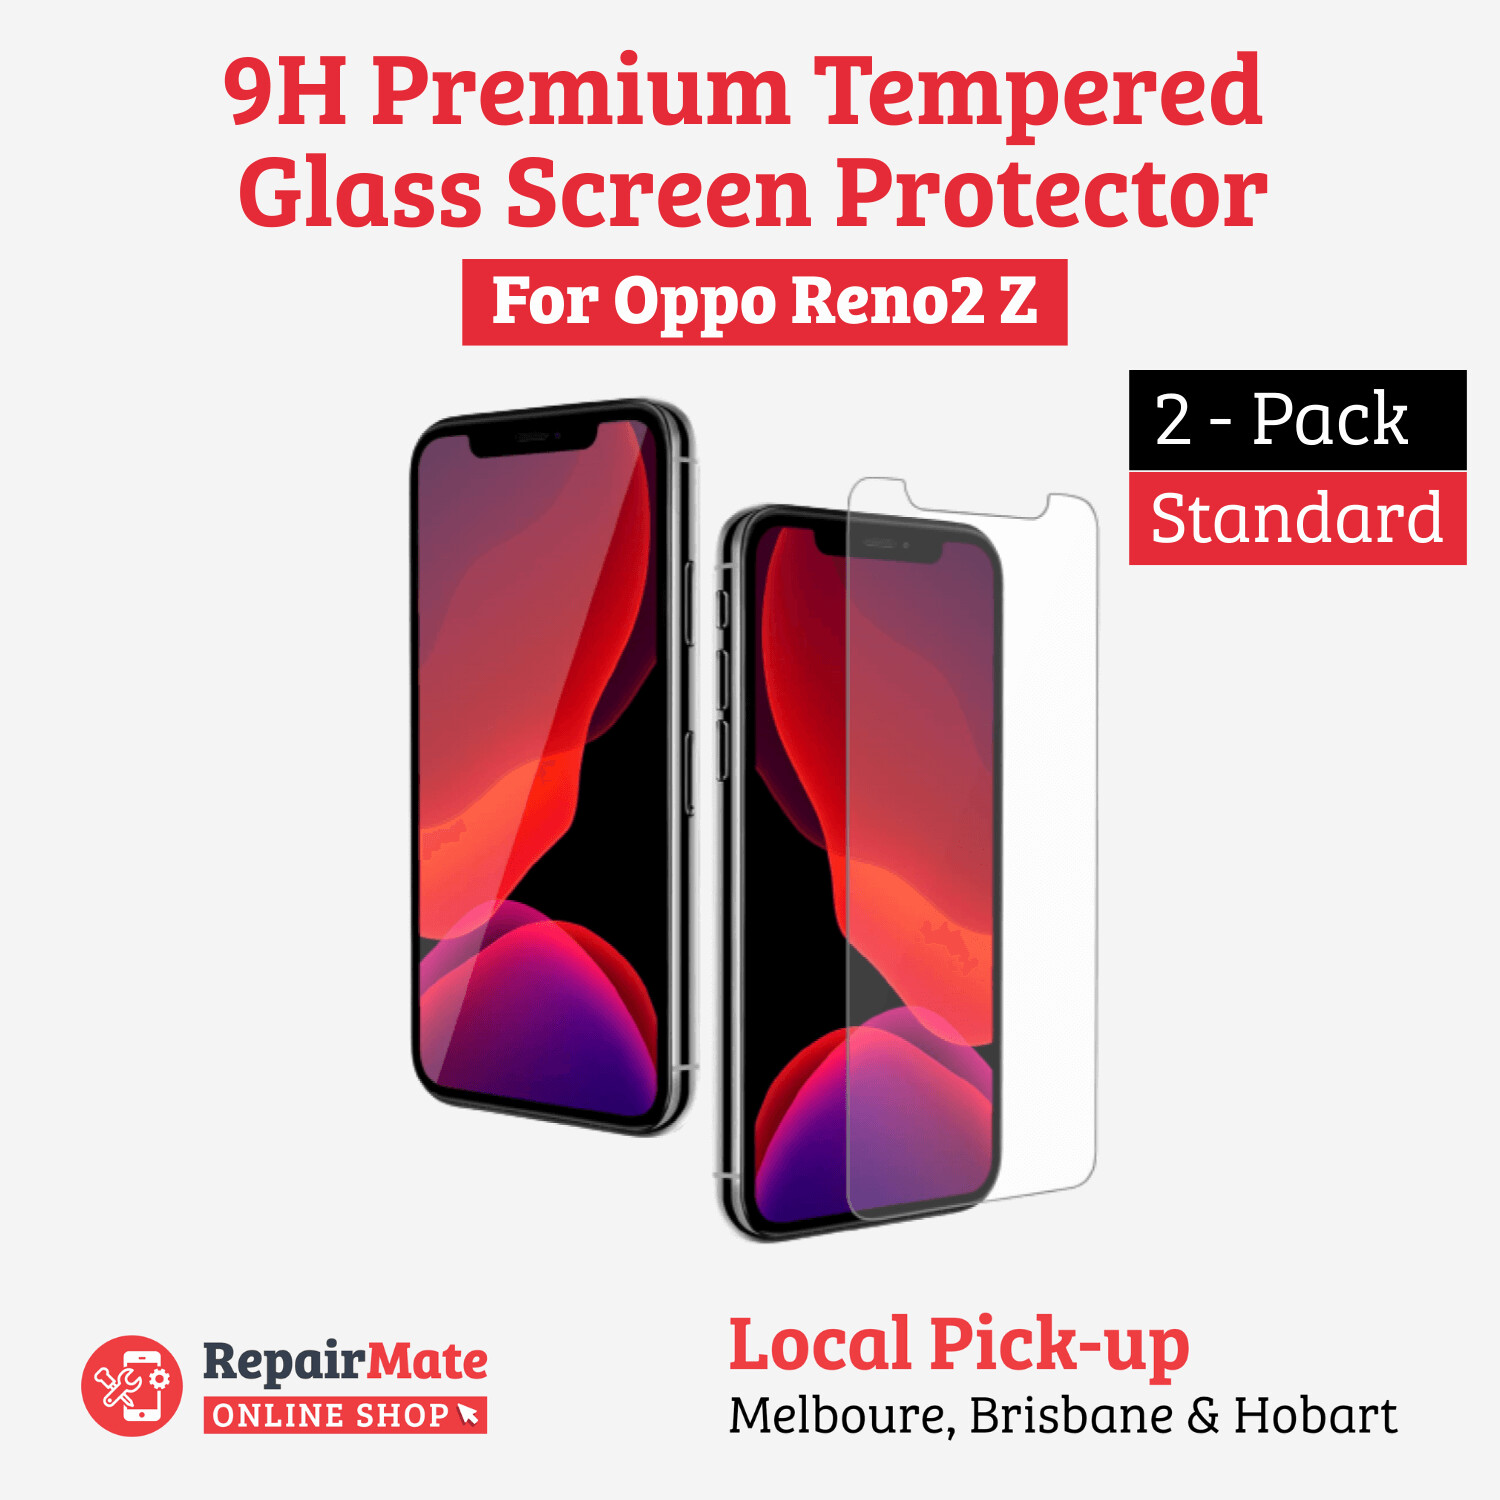 Oppo Reno2 Z 9H Premium Tempered Glass Screen Protector [2 Pack]